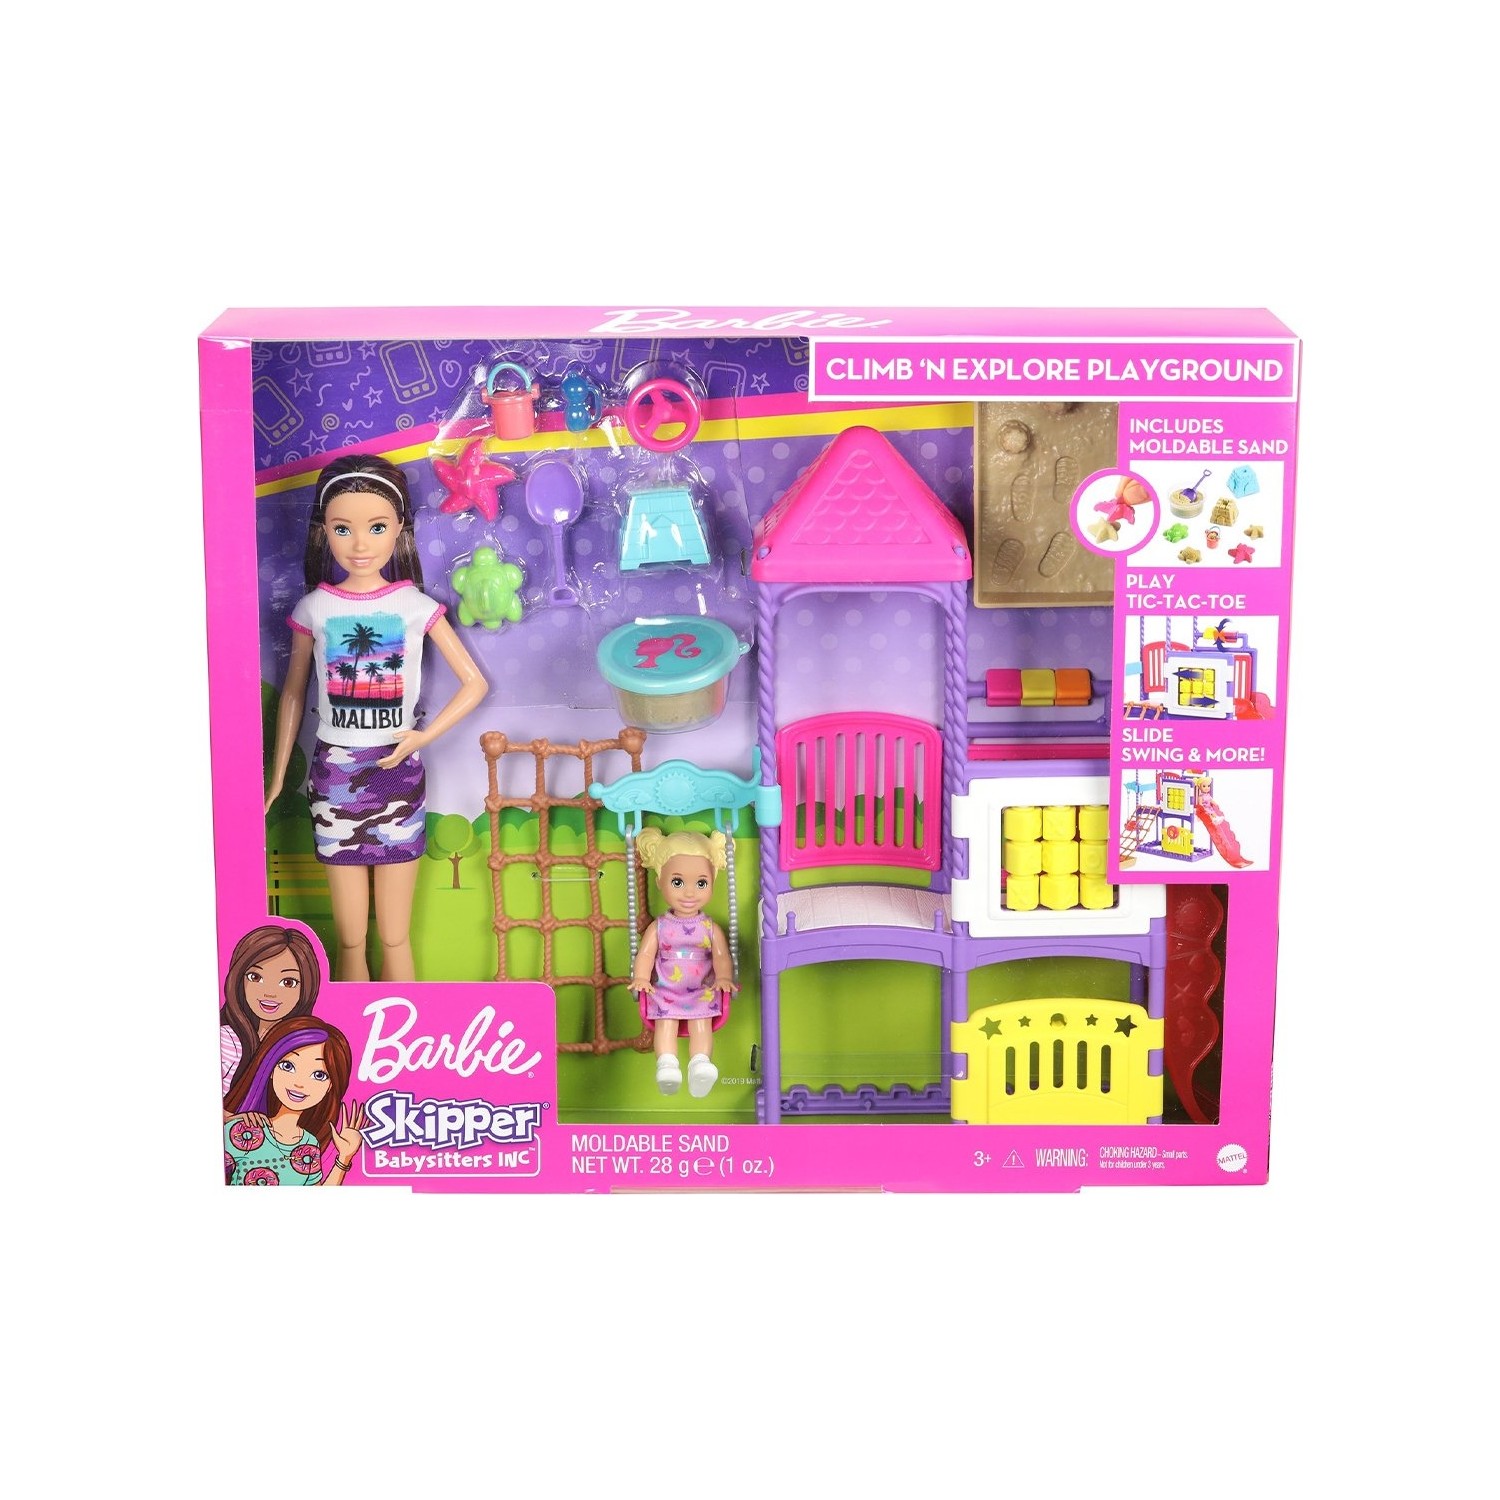 Игровой набор Barbie Skipper Babysitters игровой набор barbie экстра вендинговый аппарат hfg75